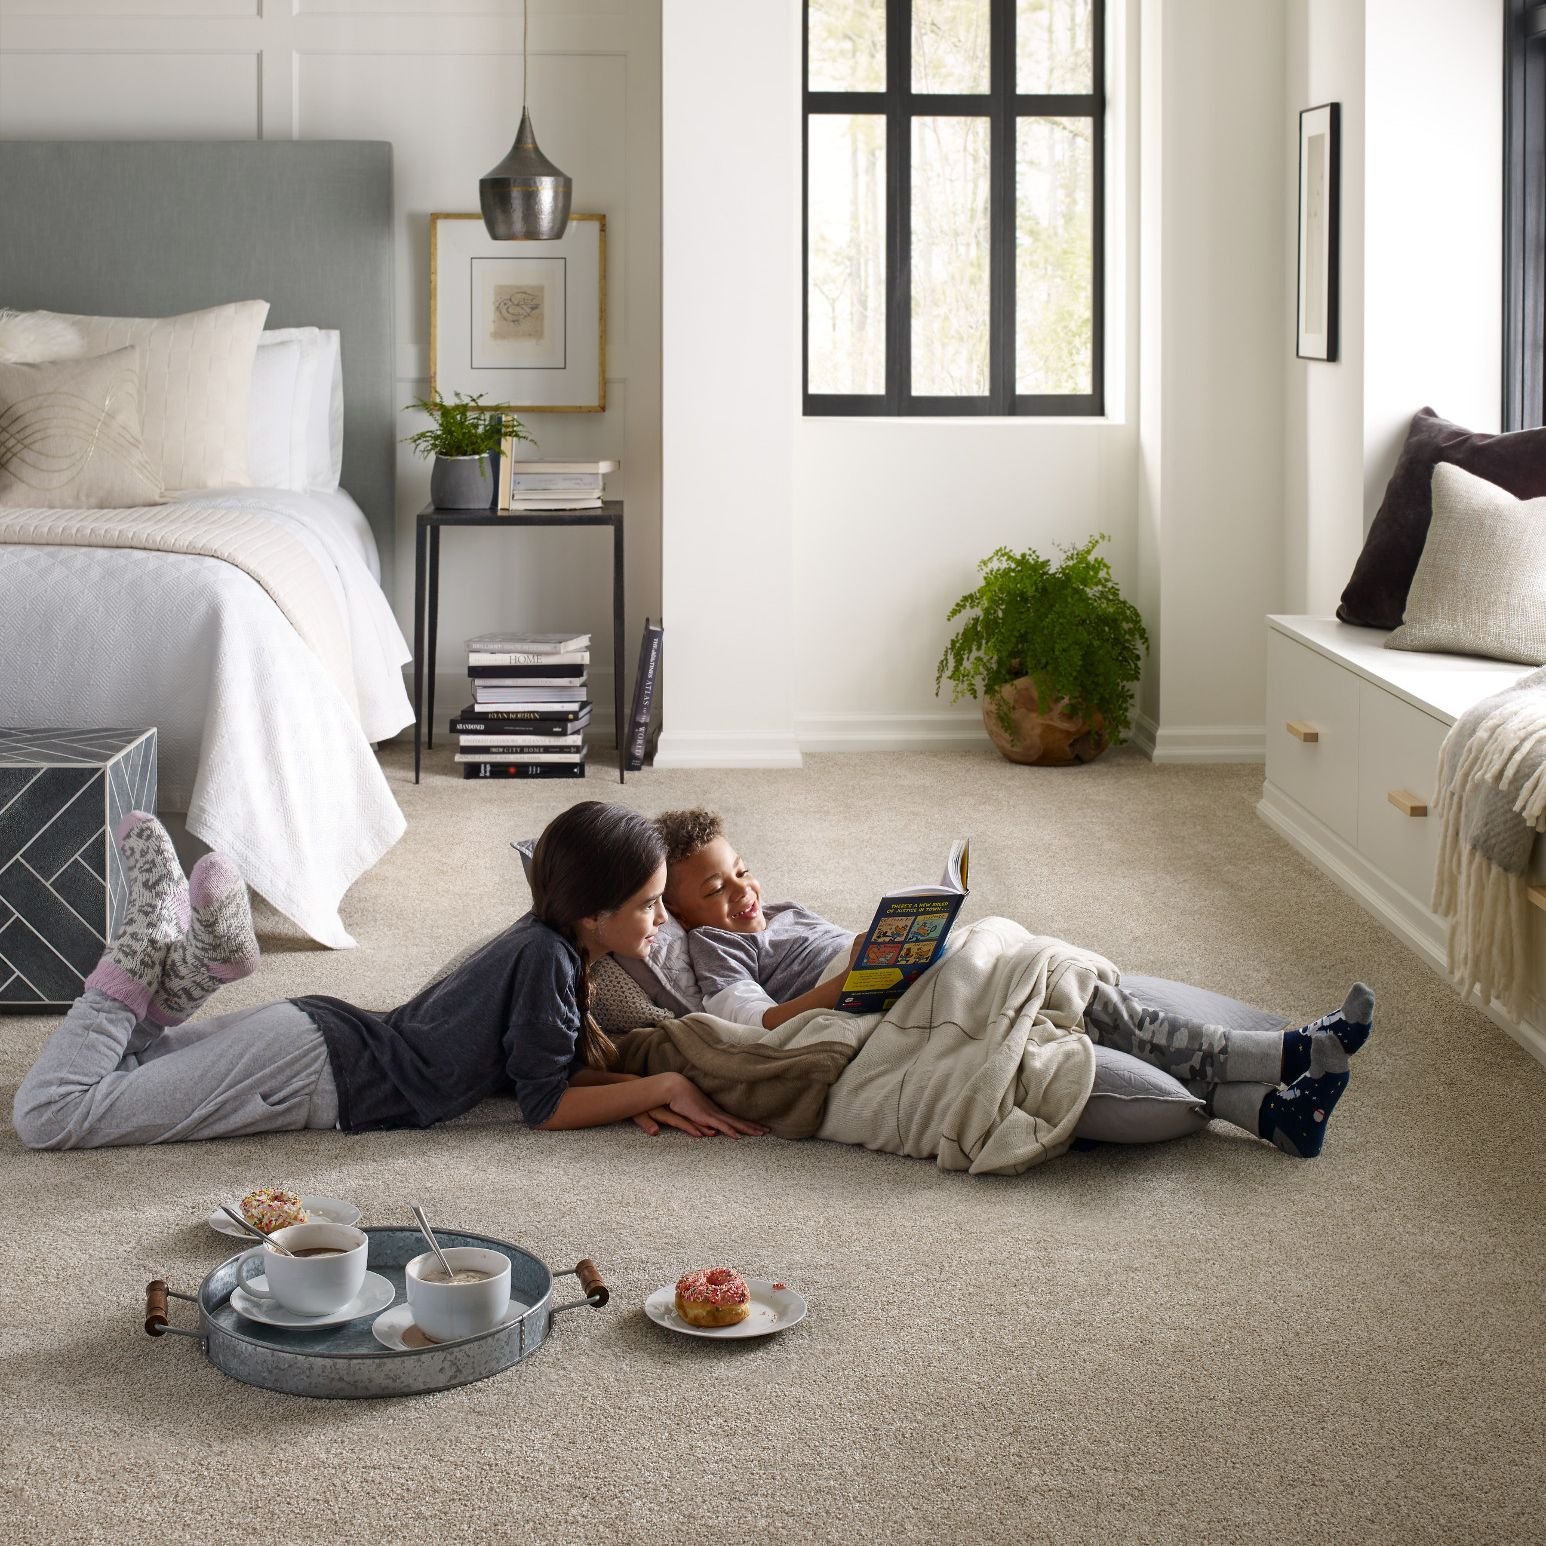 Kids reading on bedroom soft carpet from Dishman Flooring on Houma, LA area